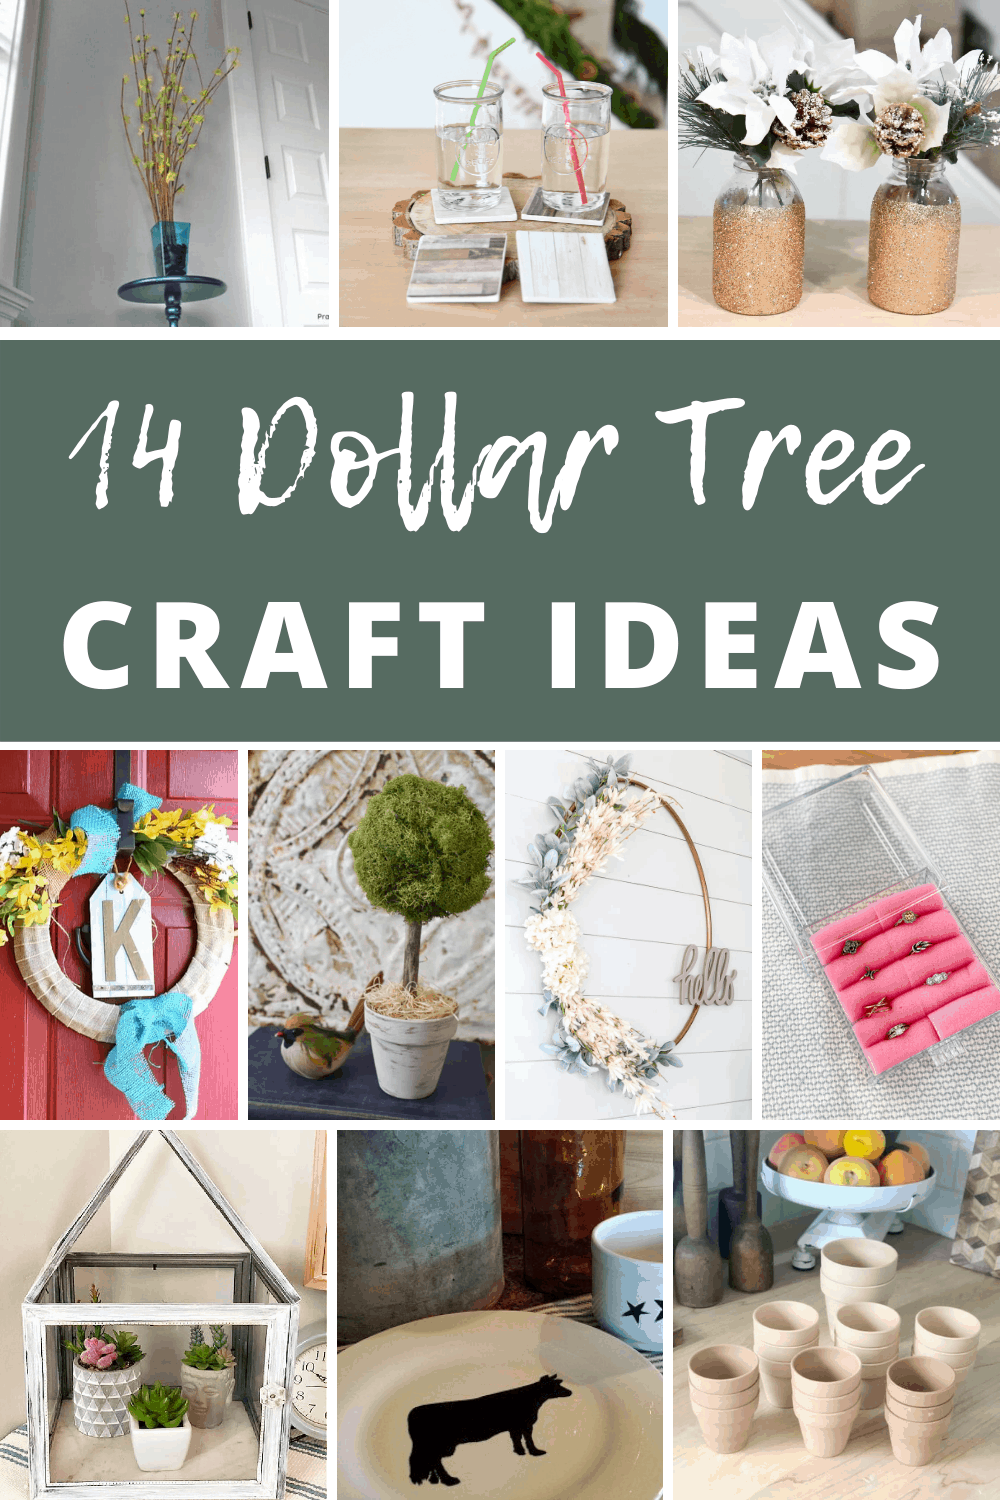 14+ Dollar Tree Crafts and Home Decor DIYs - Making Manzanita